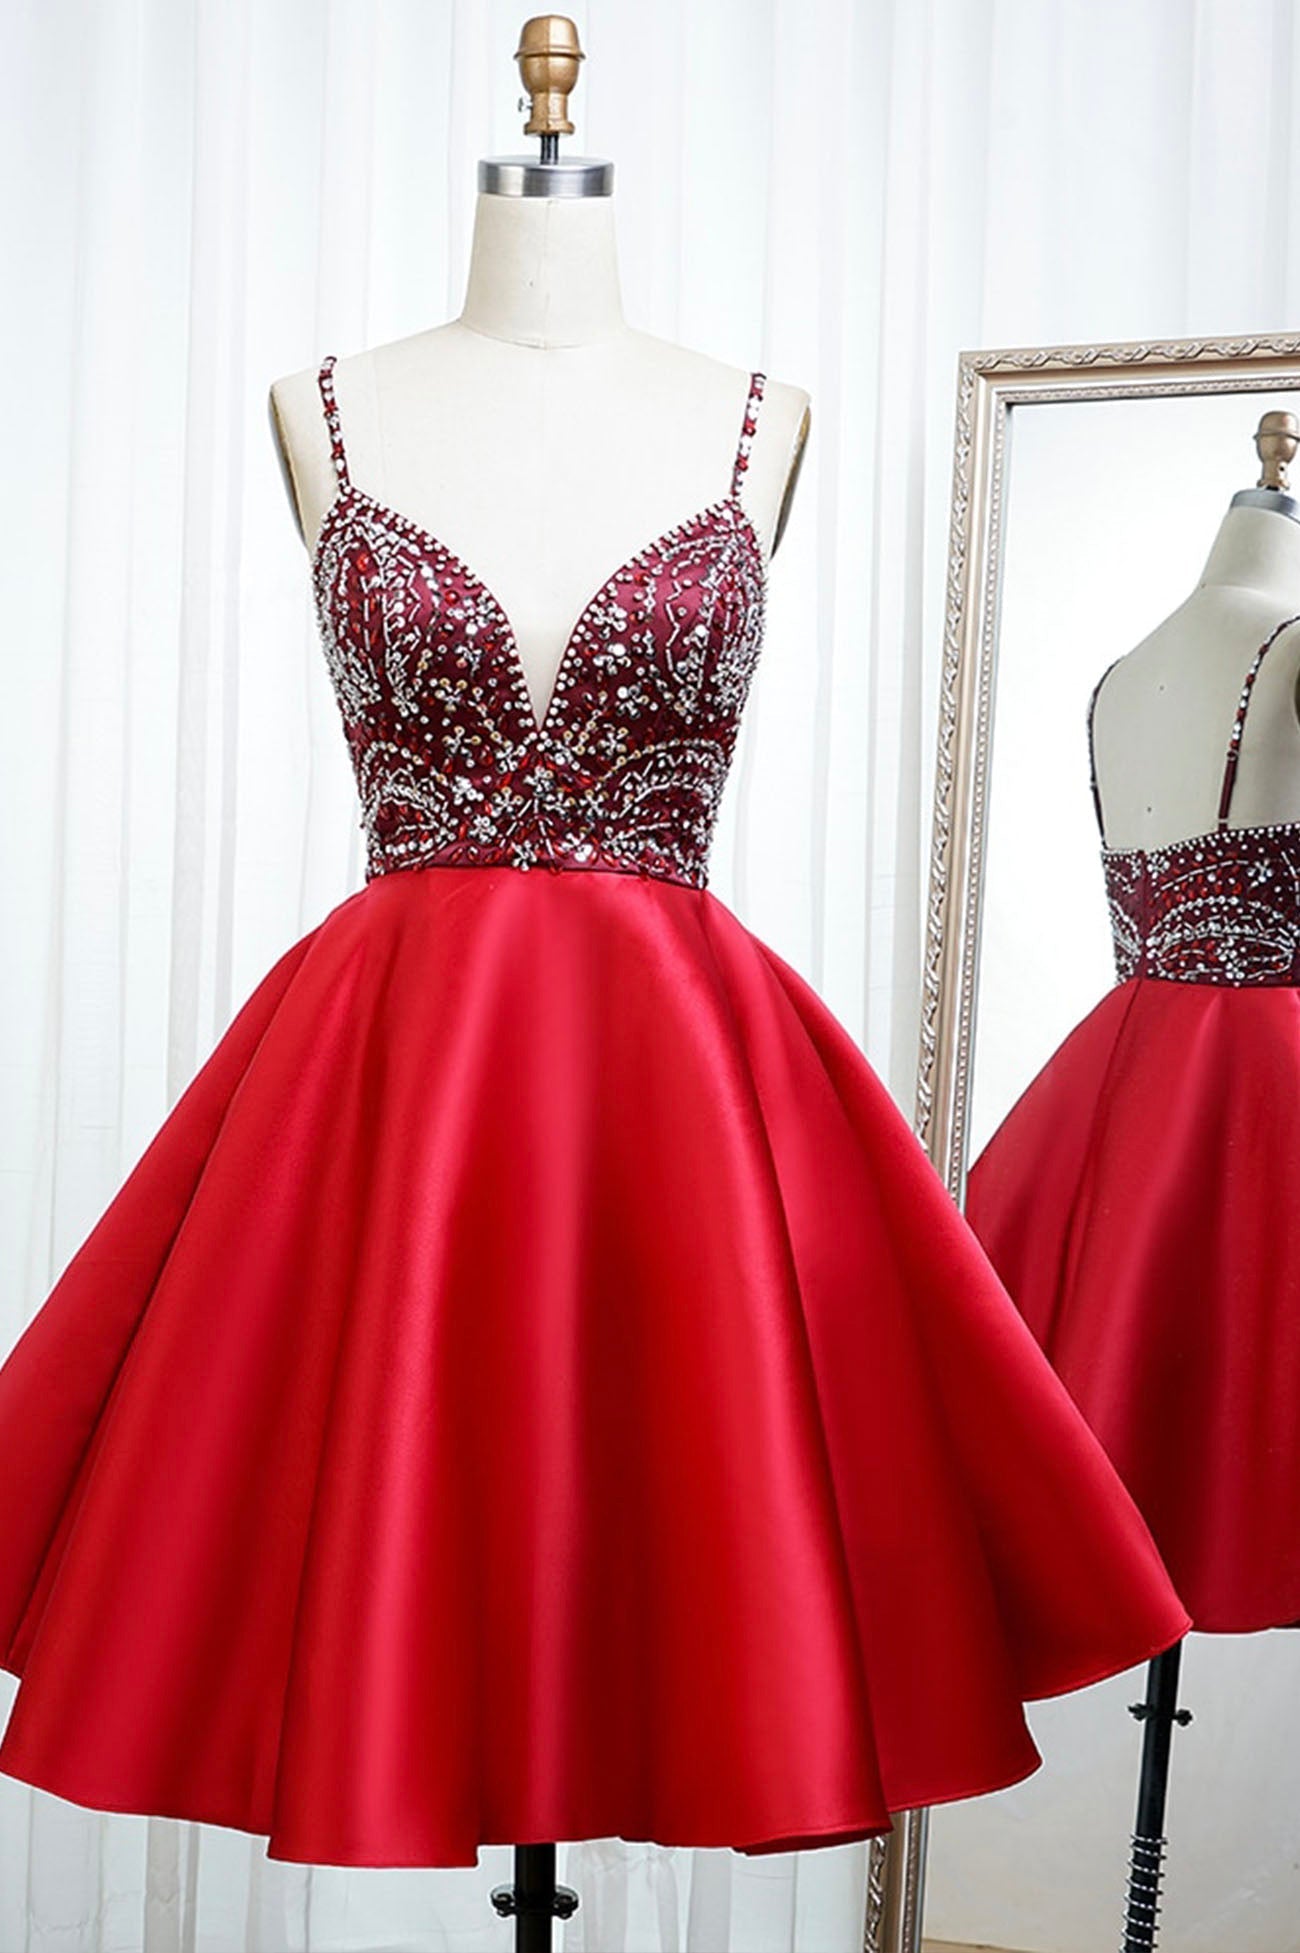 Bridesmaid Dress 2034, Red Satin Beading Short Prom Dresses, A-Line Homecoming Dresses